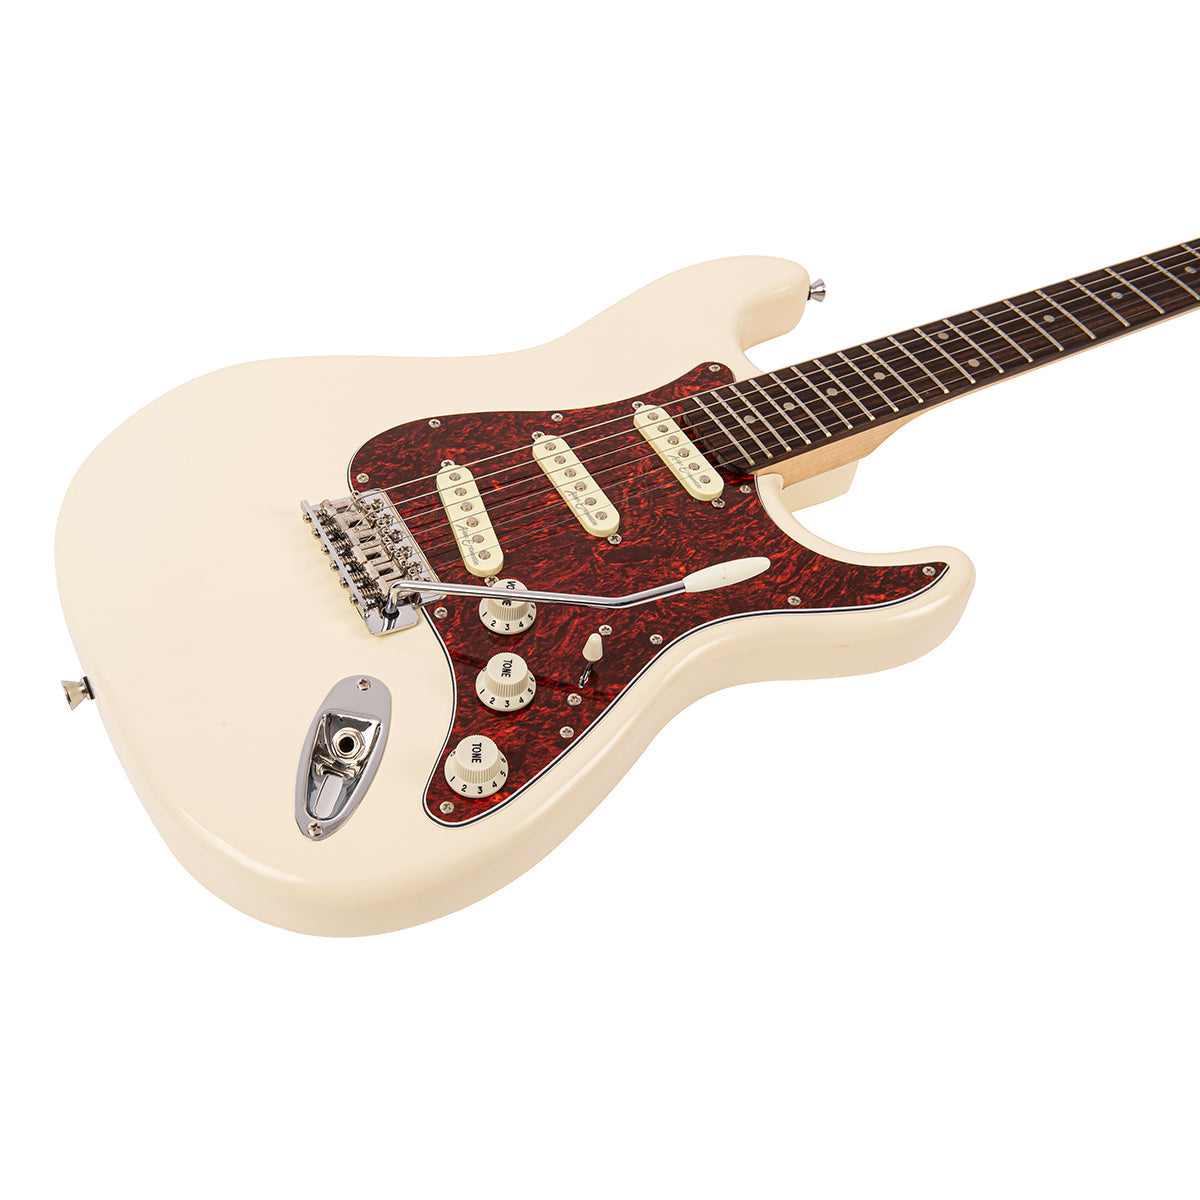 Vintage V60 Coaster Series Electric Guitar ~ Vintage White, Electric Guitar for sale at Richards Guitars.